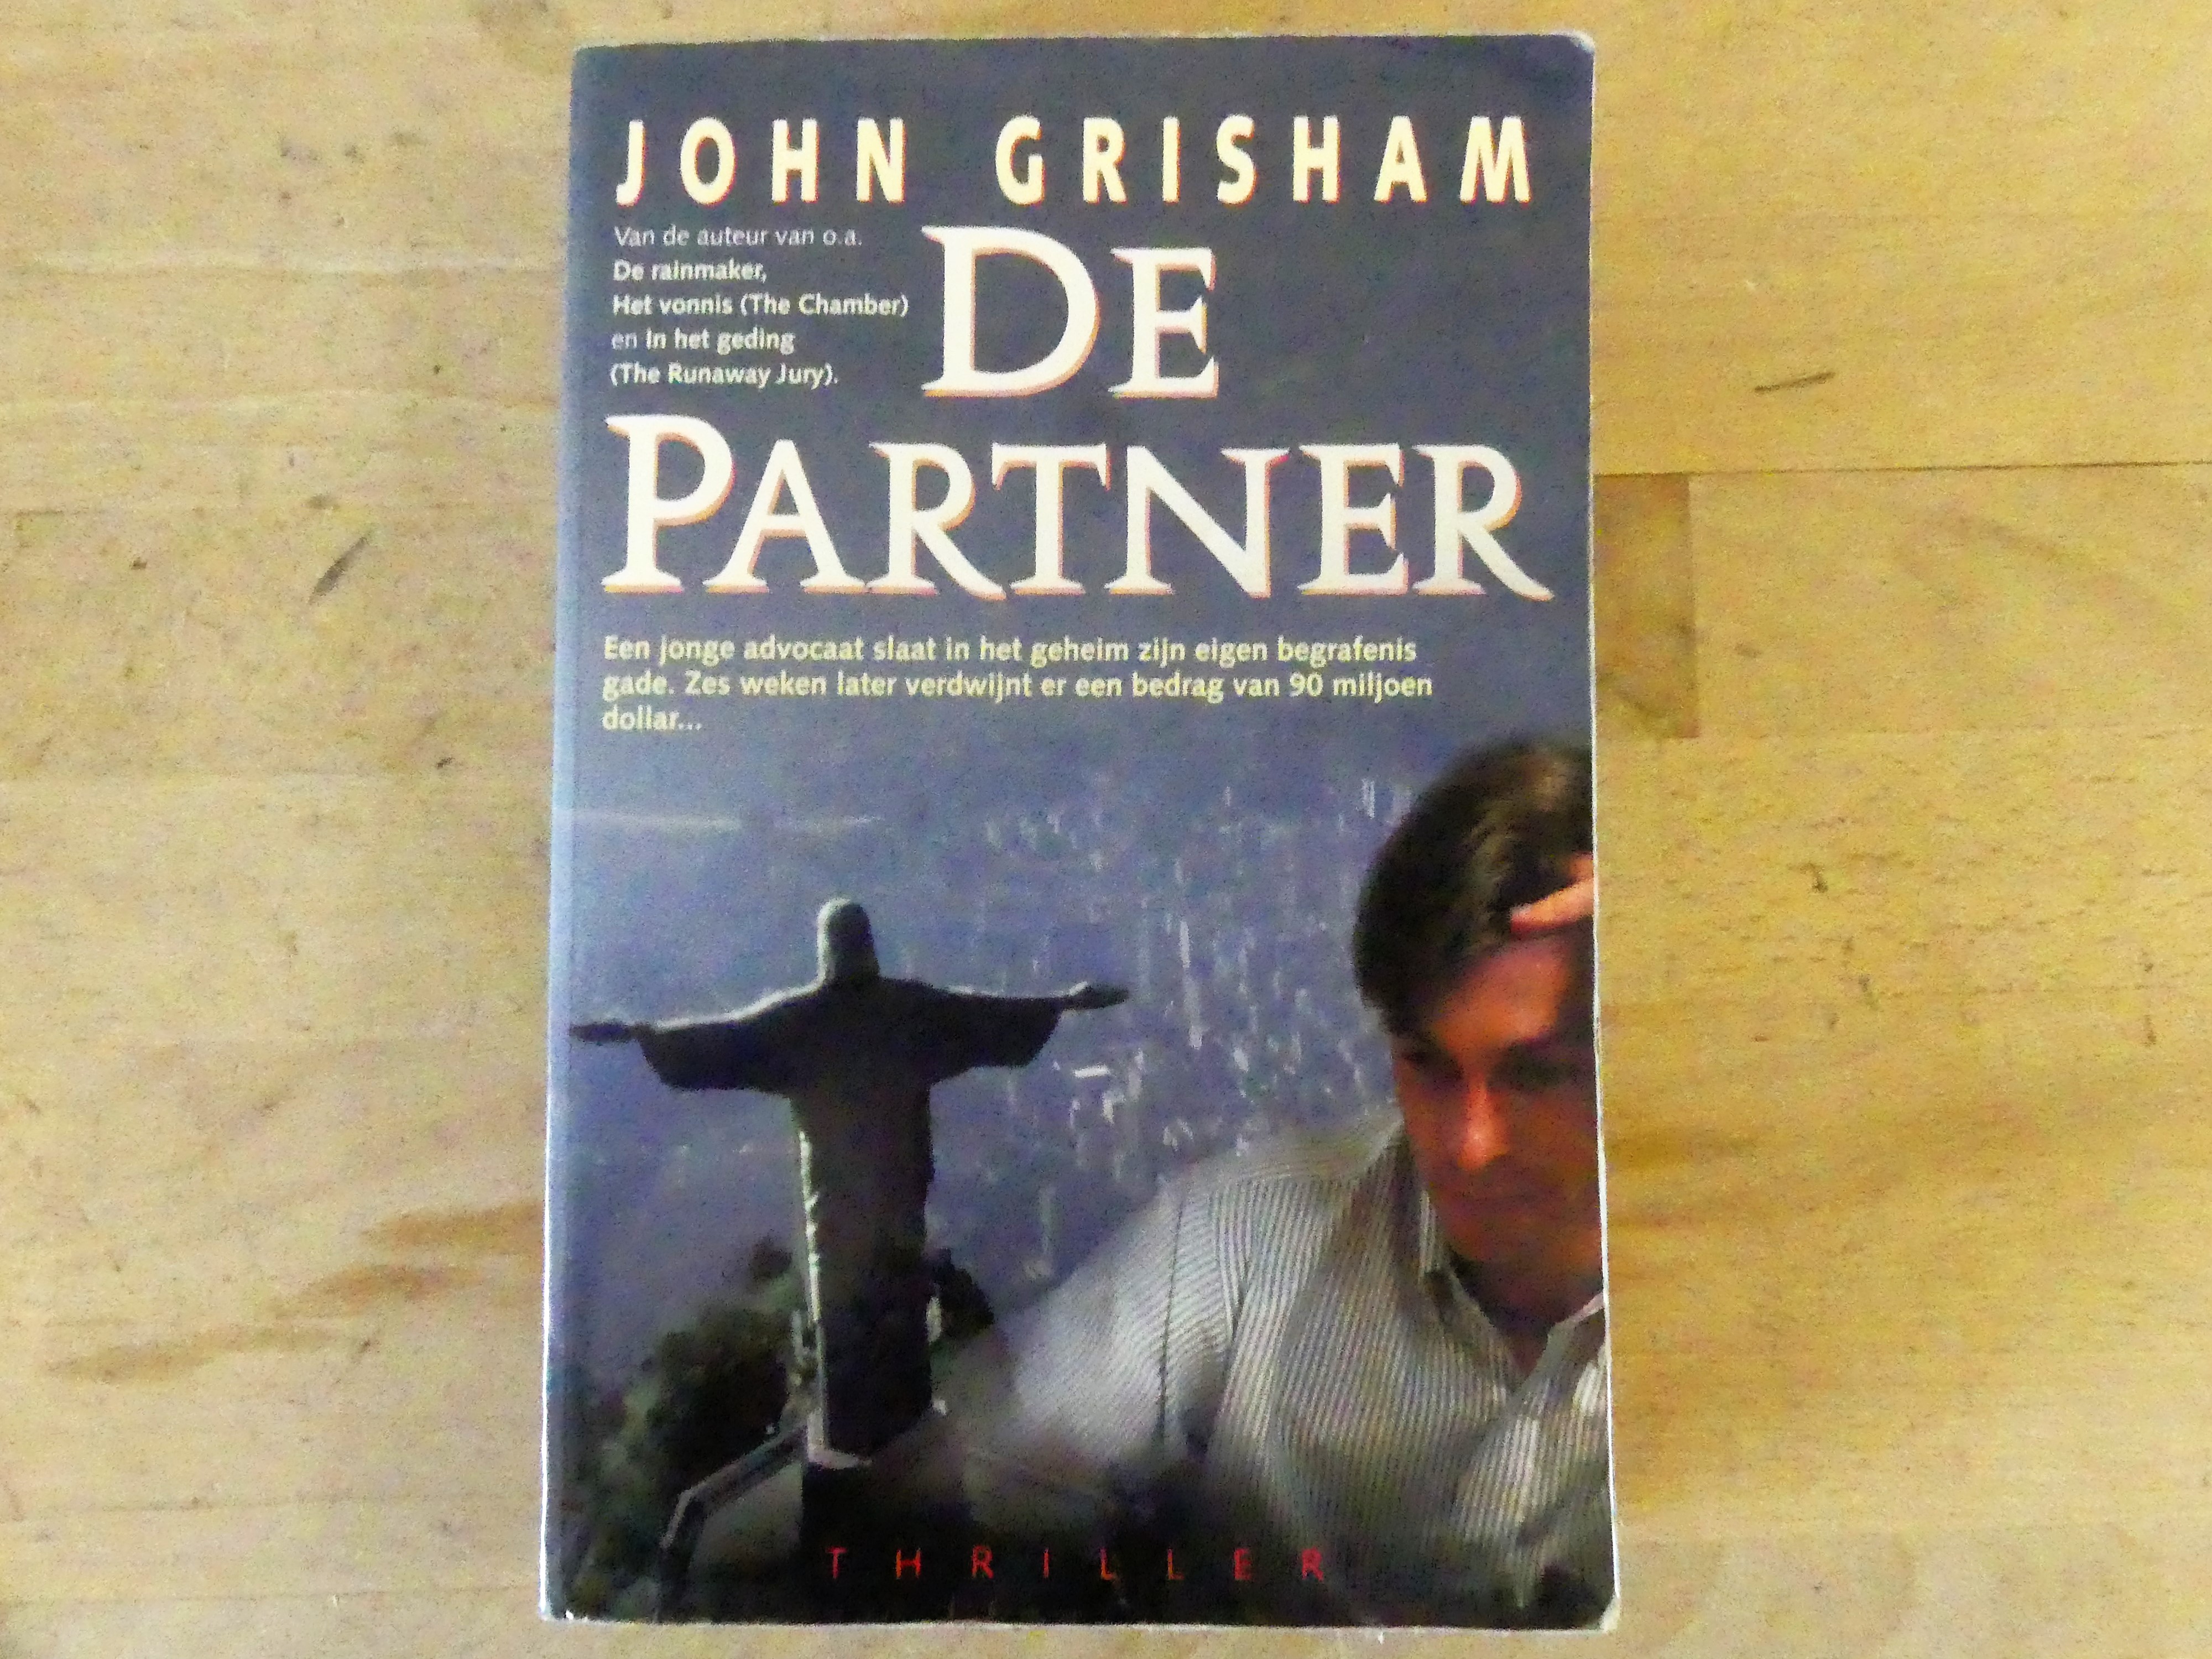 John Grisham "De Partner"